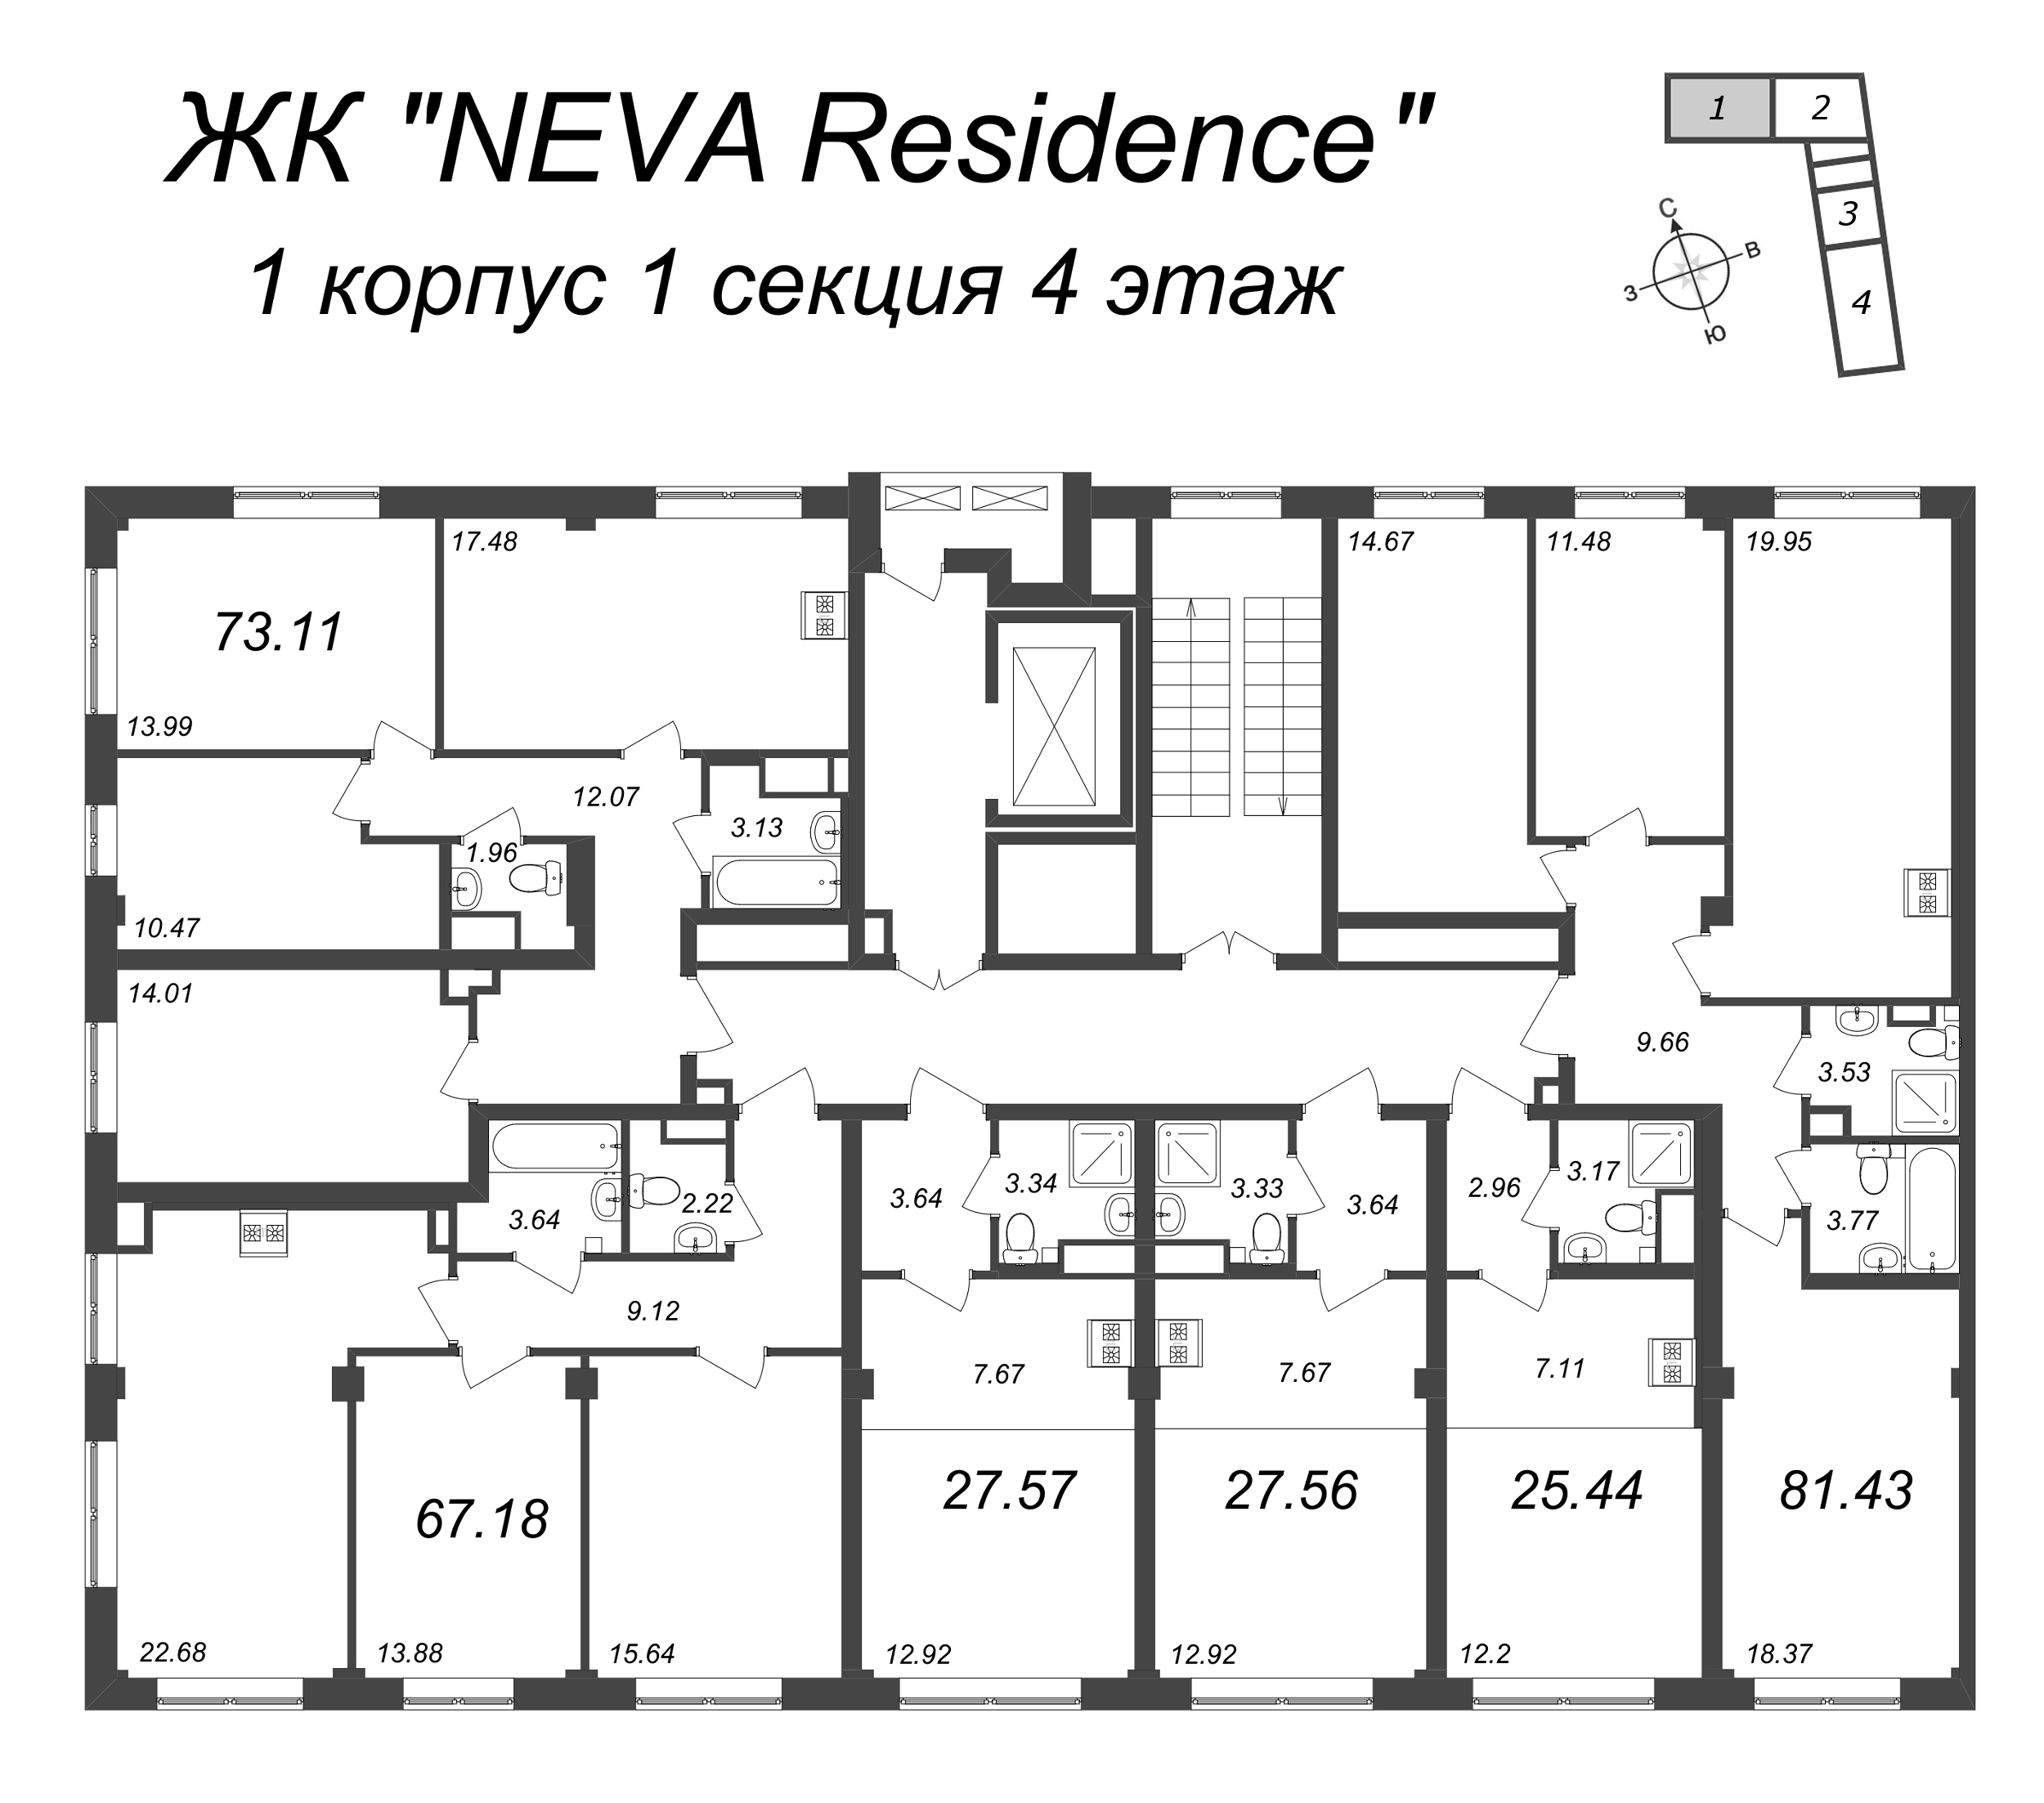 4-комнатная (Евро) квартира, 73.11 м² - планировка этажа